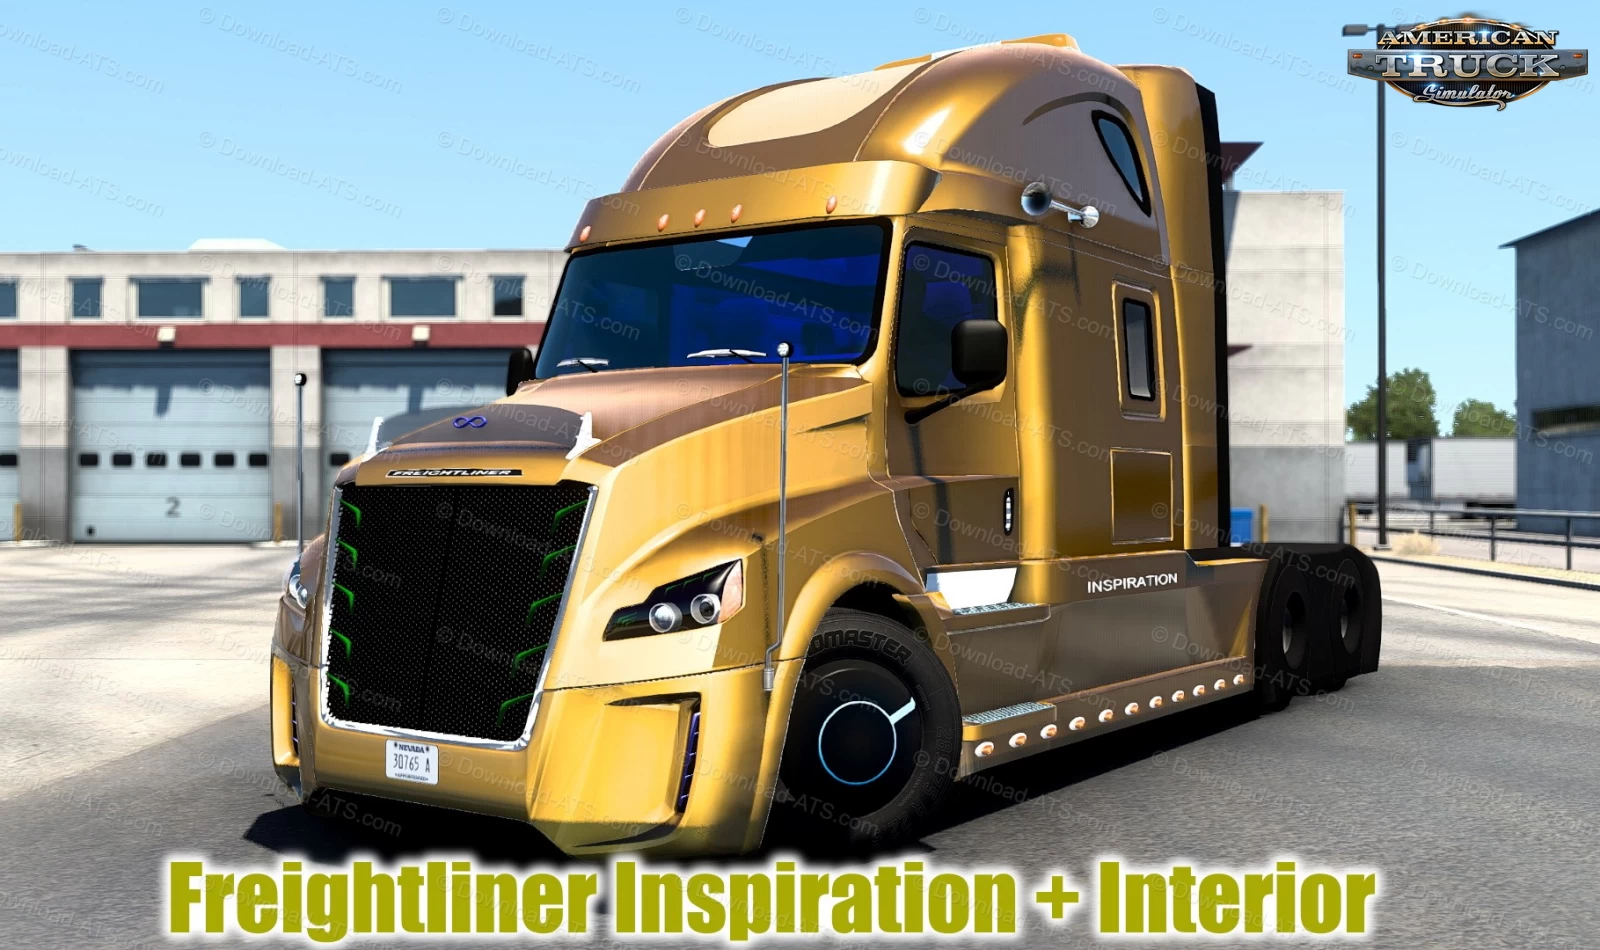 Freightliner Inspiration + Interior v2.0 (1.48.x) for ATS